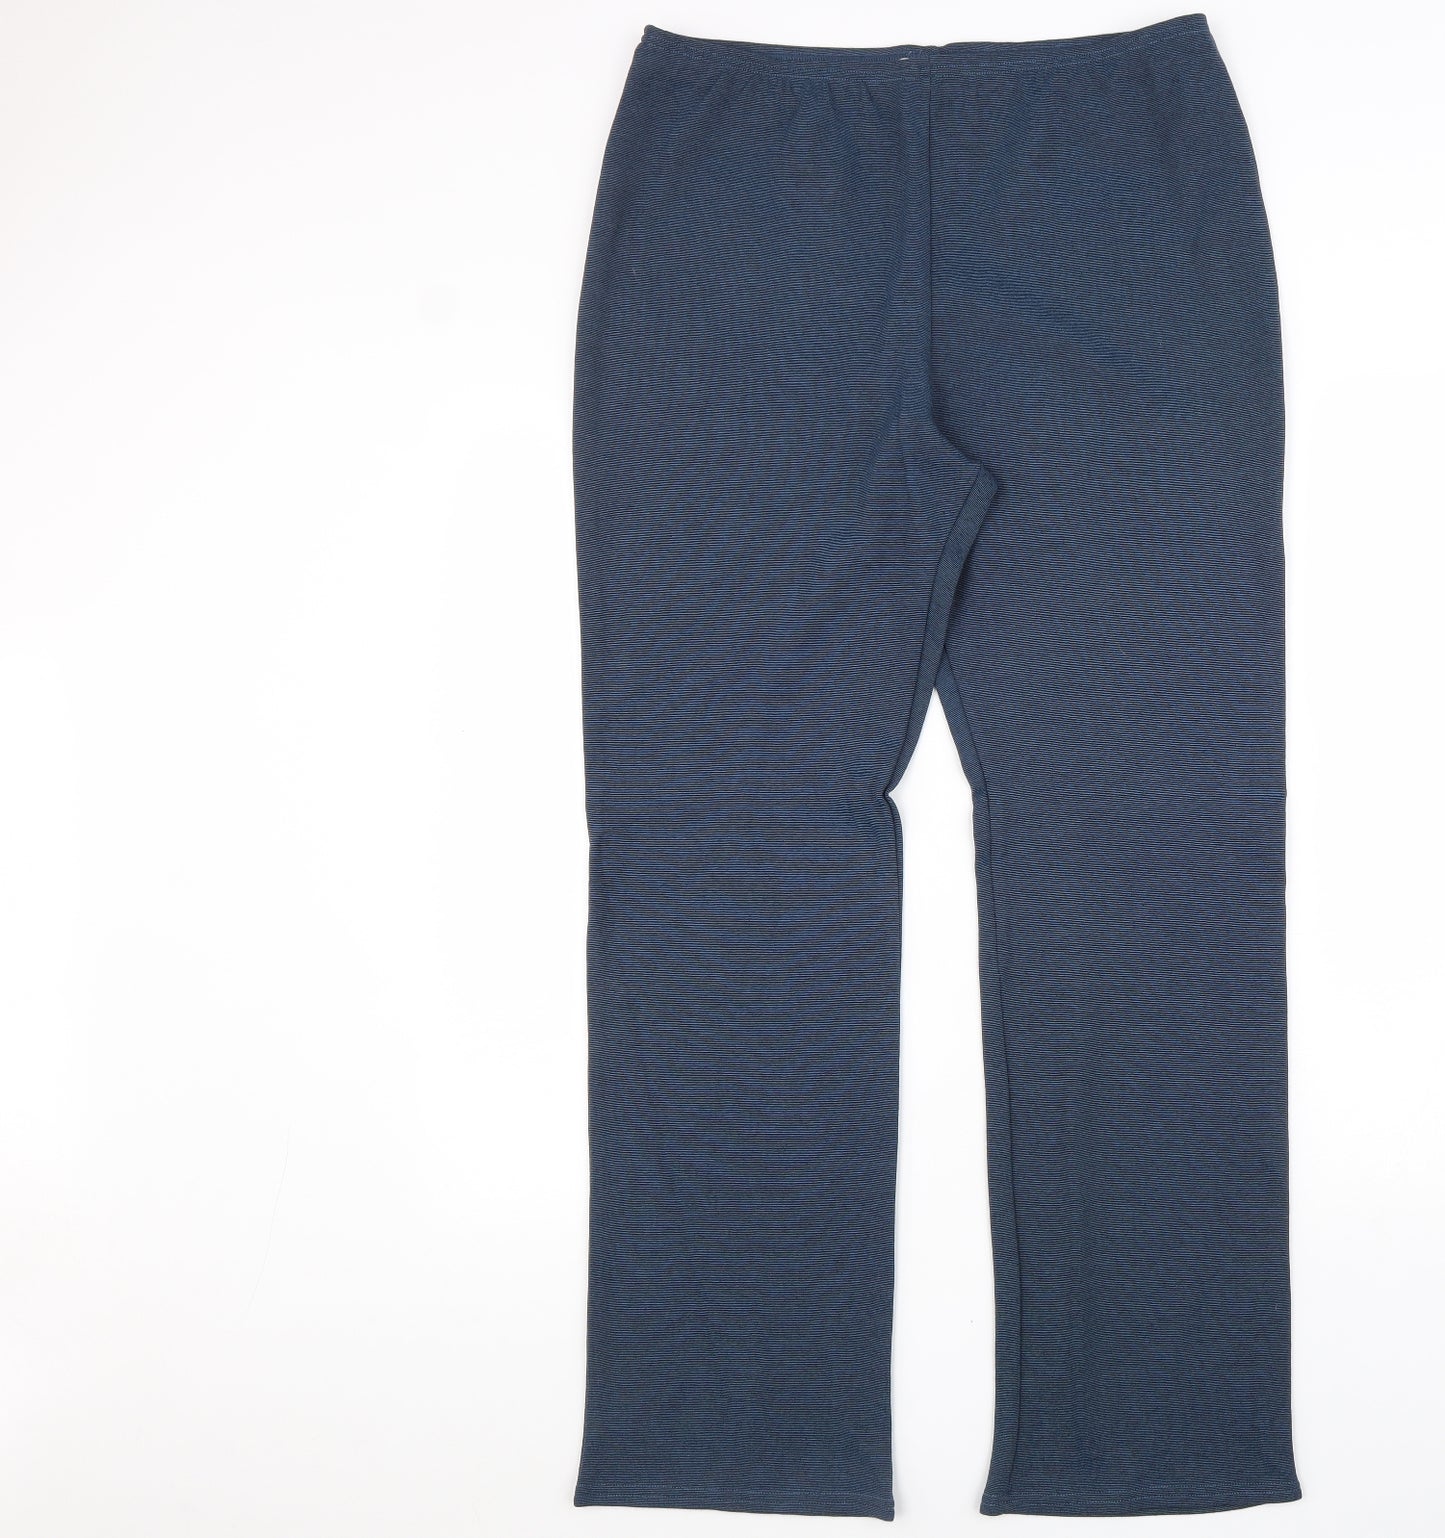 Casual Wear Womens Blue Striped Polyamide Trousers Size 18 L30 in Regular